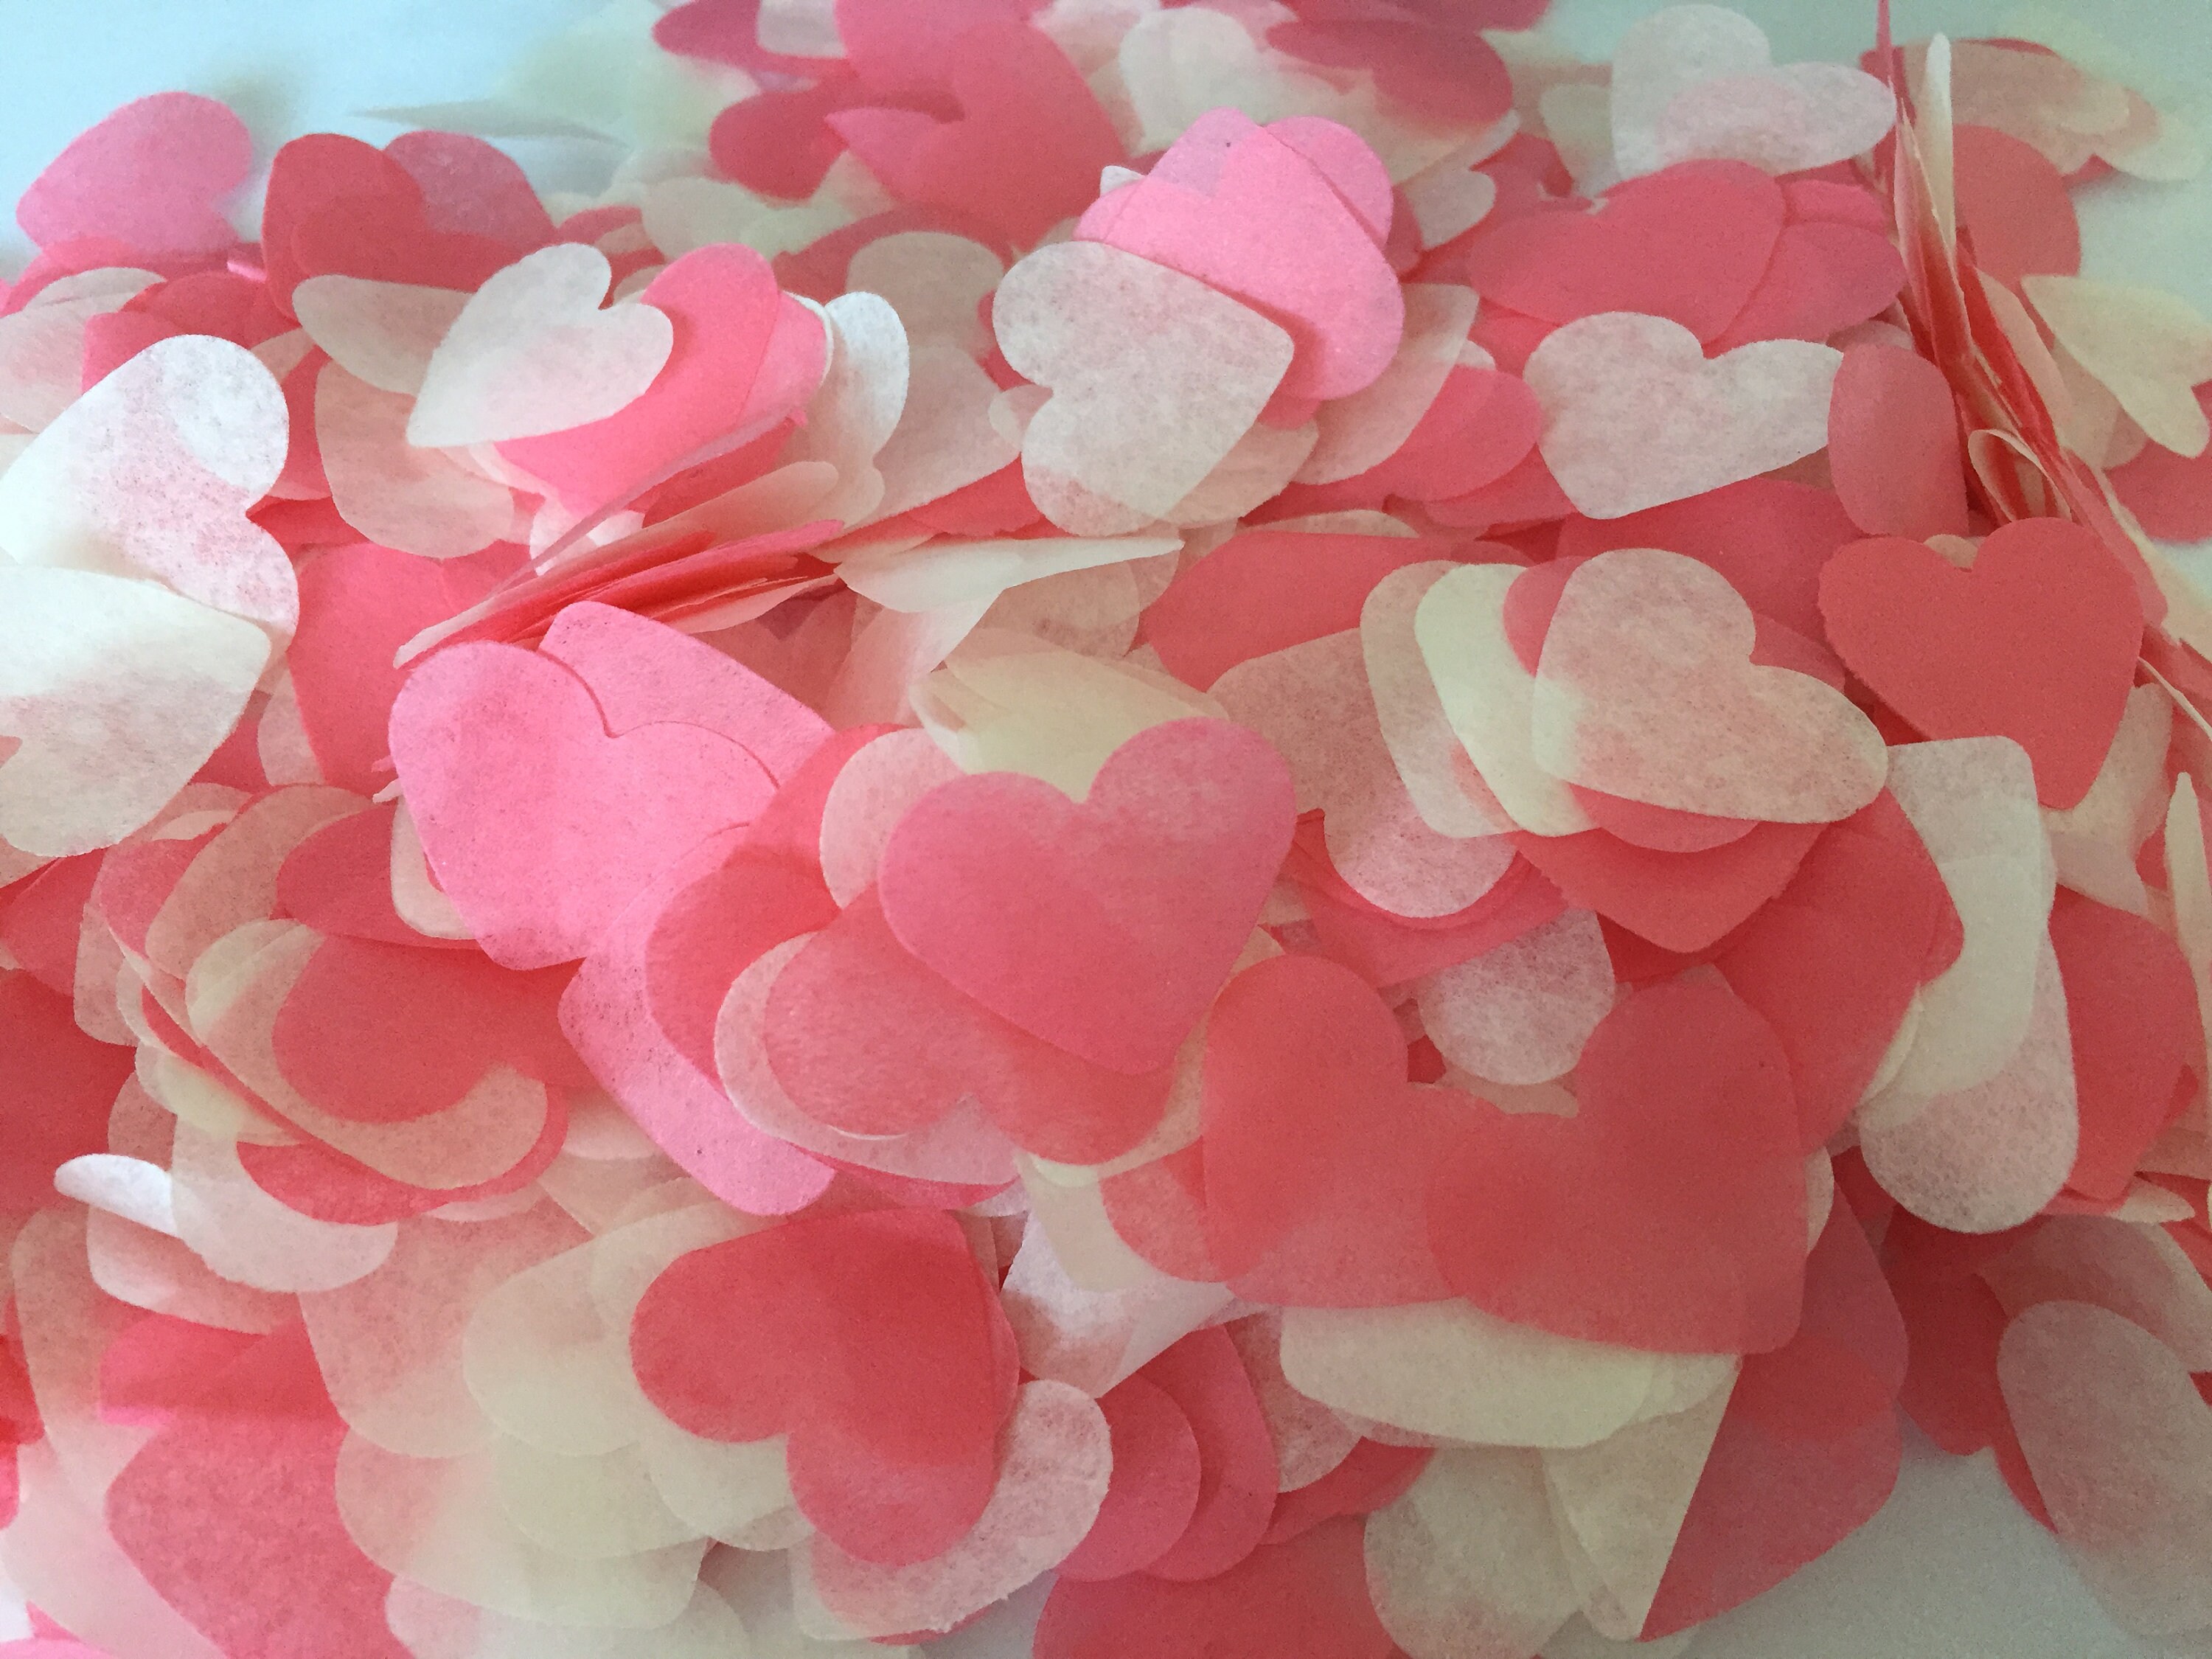 1500 pieces  Wedding Confetti  Pink White Ivory & Silver Hearts EcoFriendly 